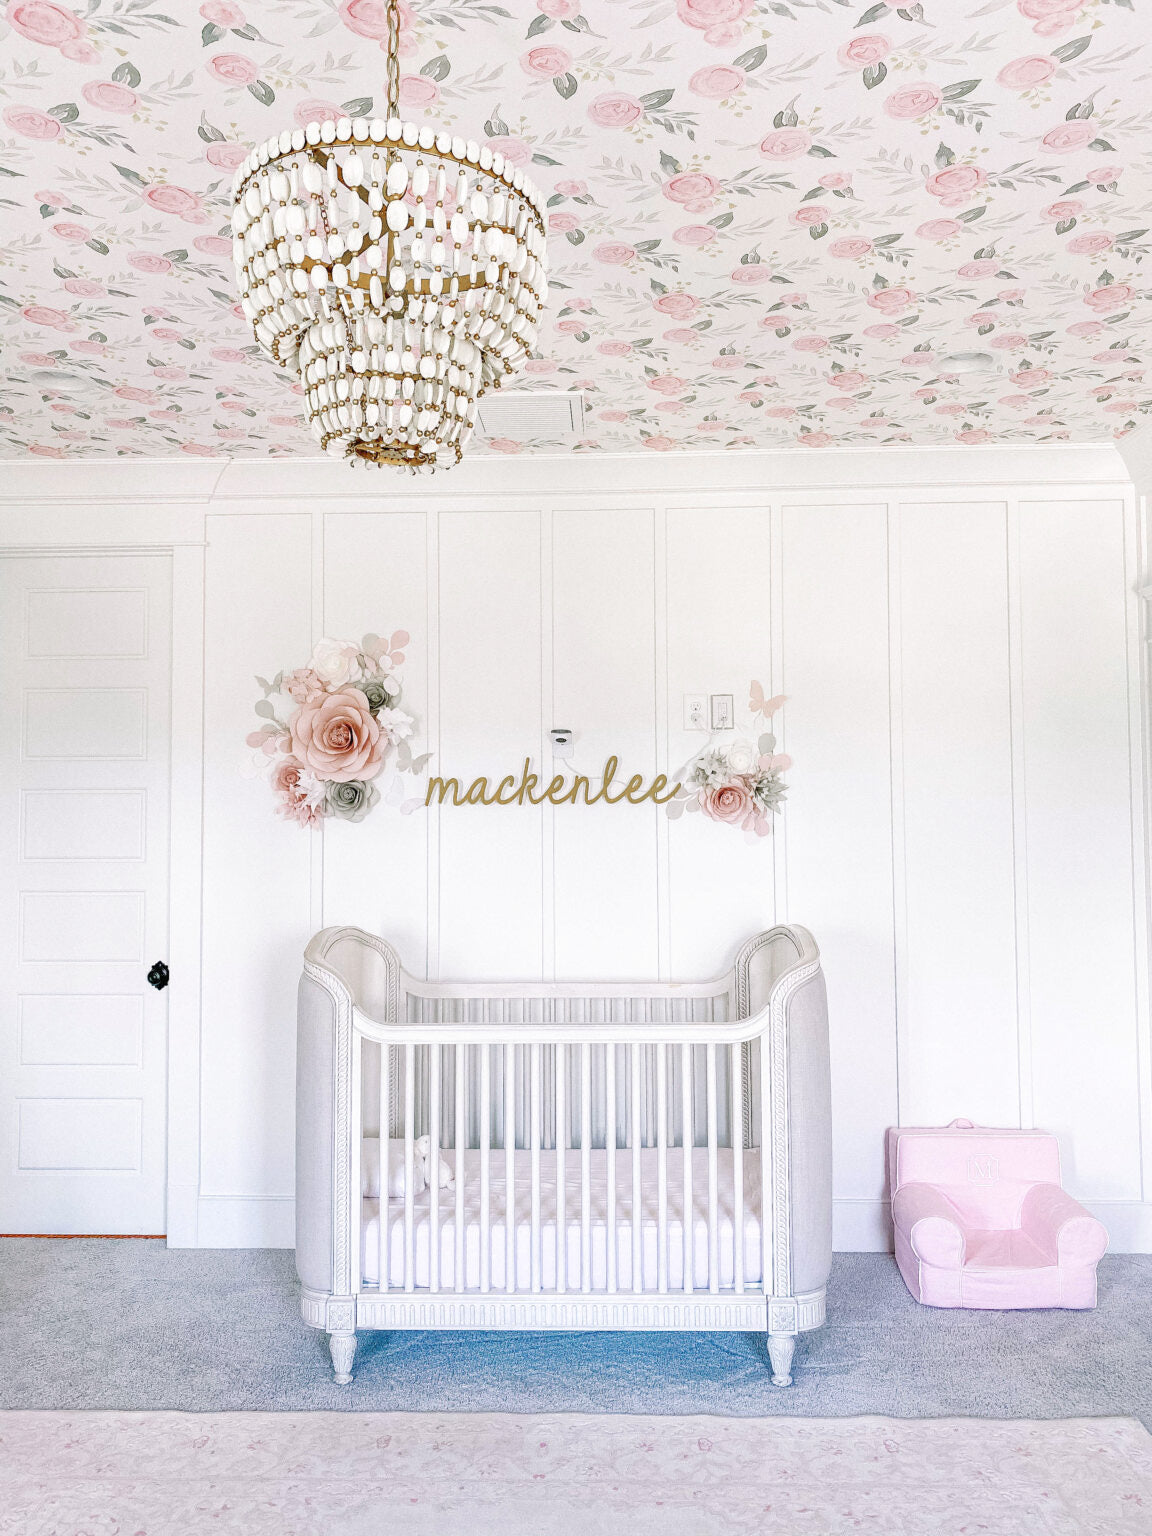 Angela Lanter's Toddler Room Reveal: Eye-Catching Paper Flower Bed Decor